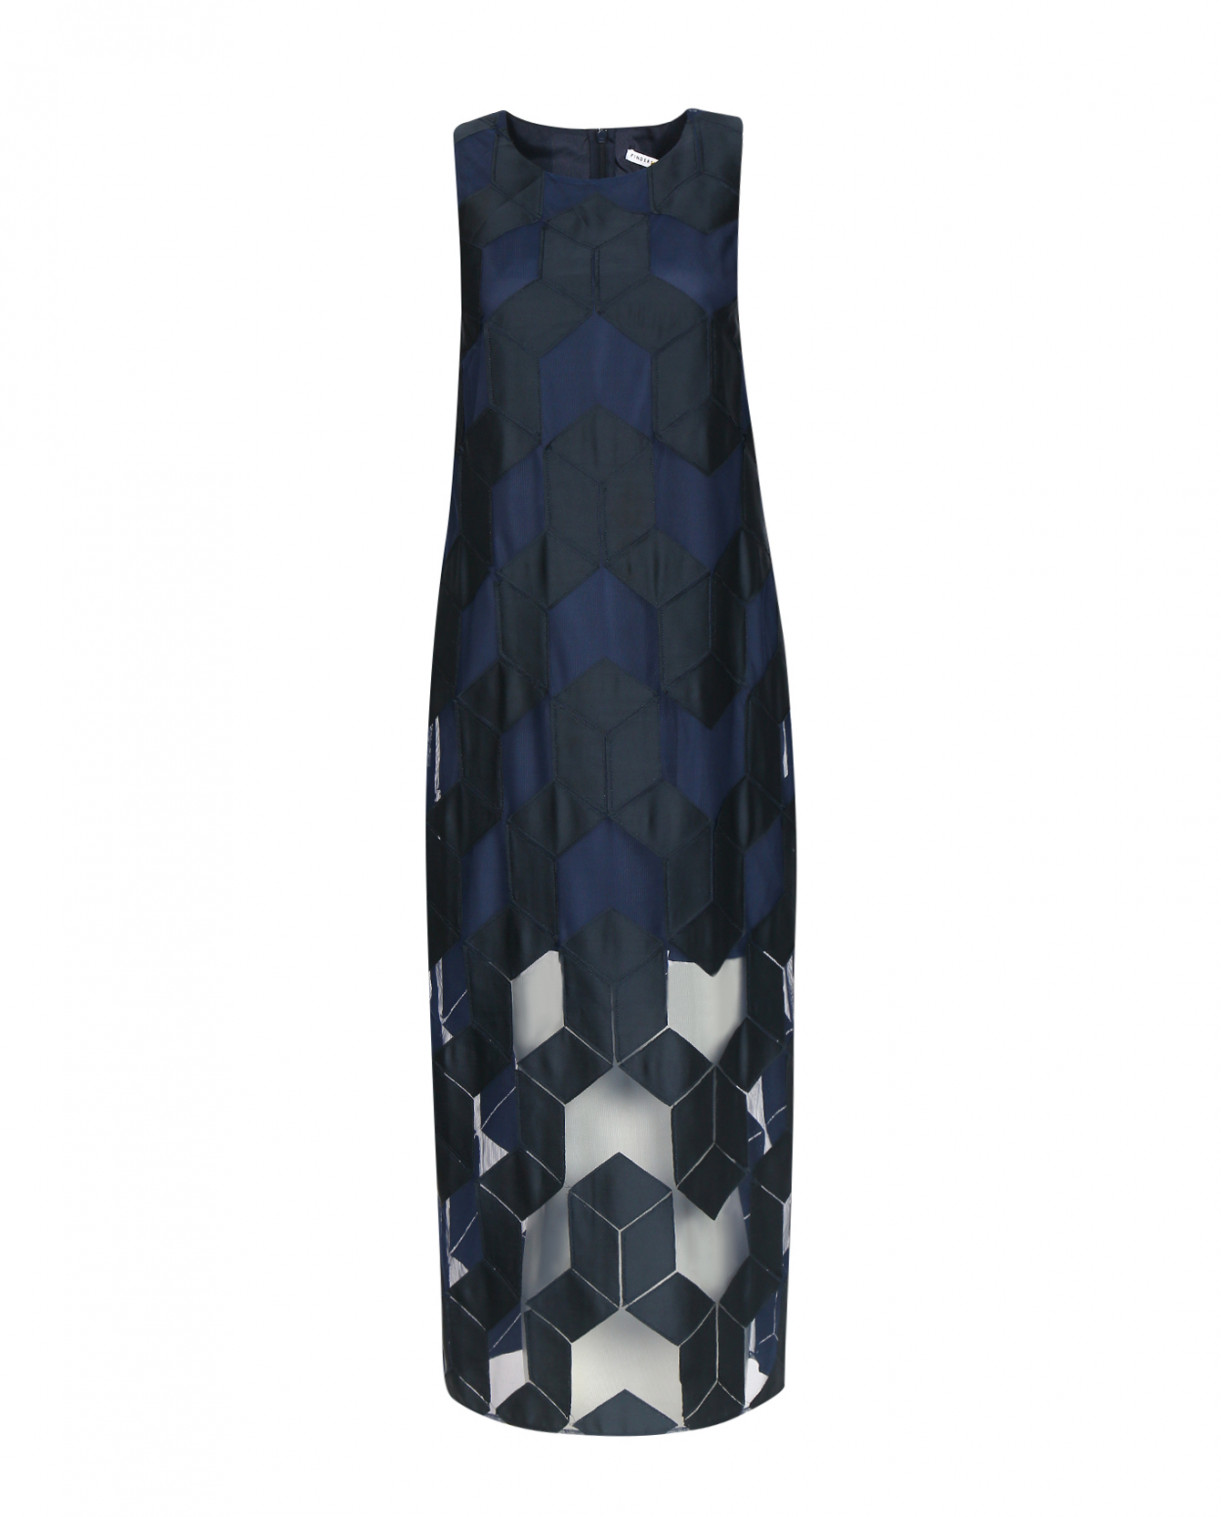 Платье-миди без рукавов с геометрическим узором Finders Keepers  –  Общий вид  – Цвет:  Синий